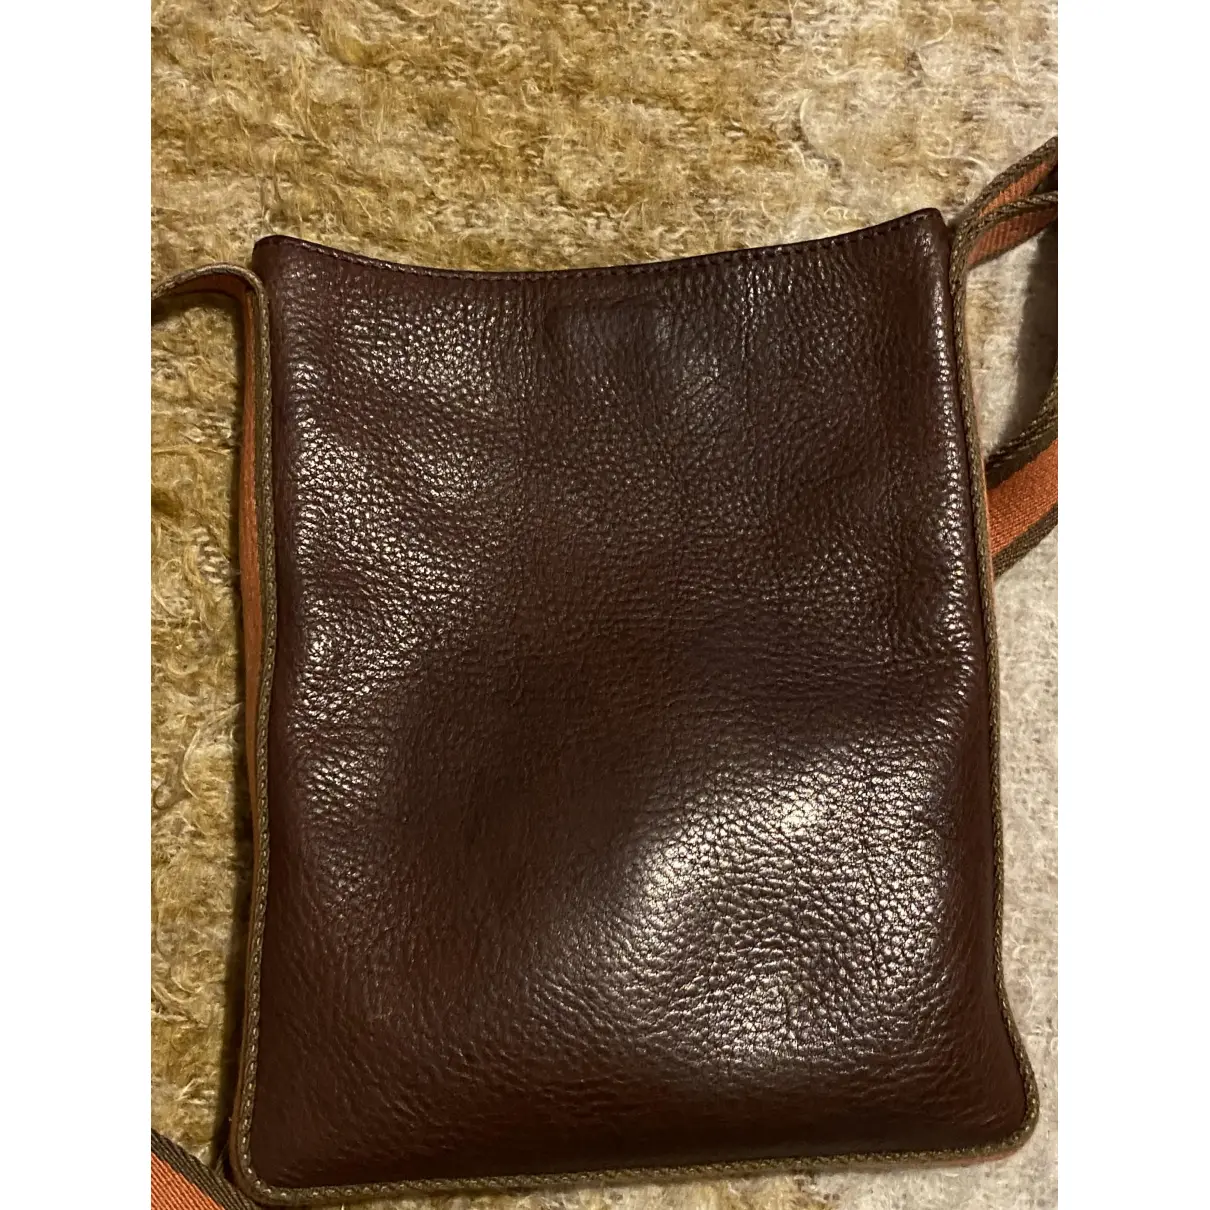 Buy Loewe Joyce leather handbag online